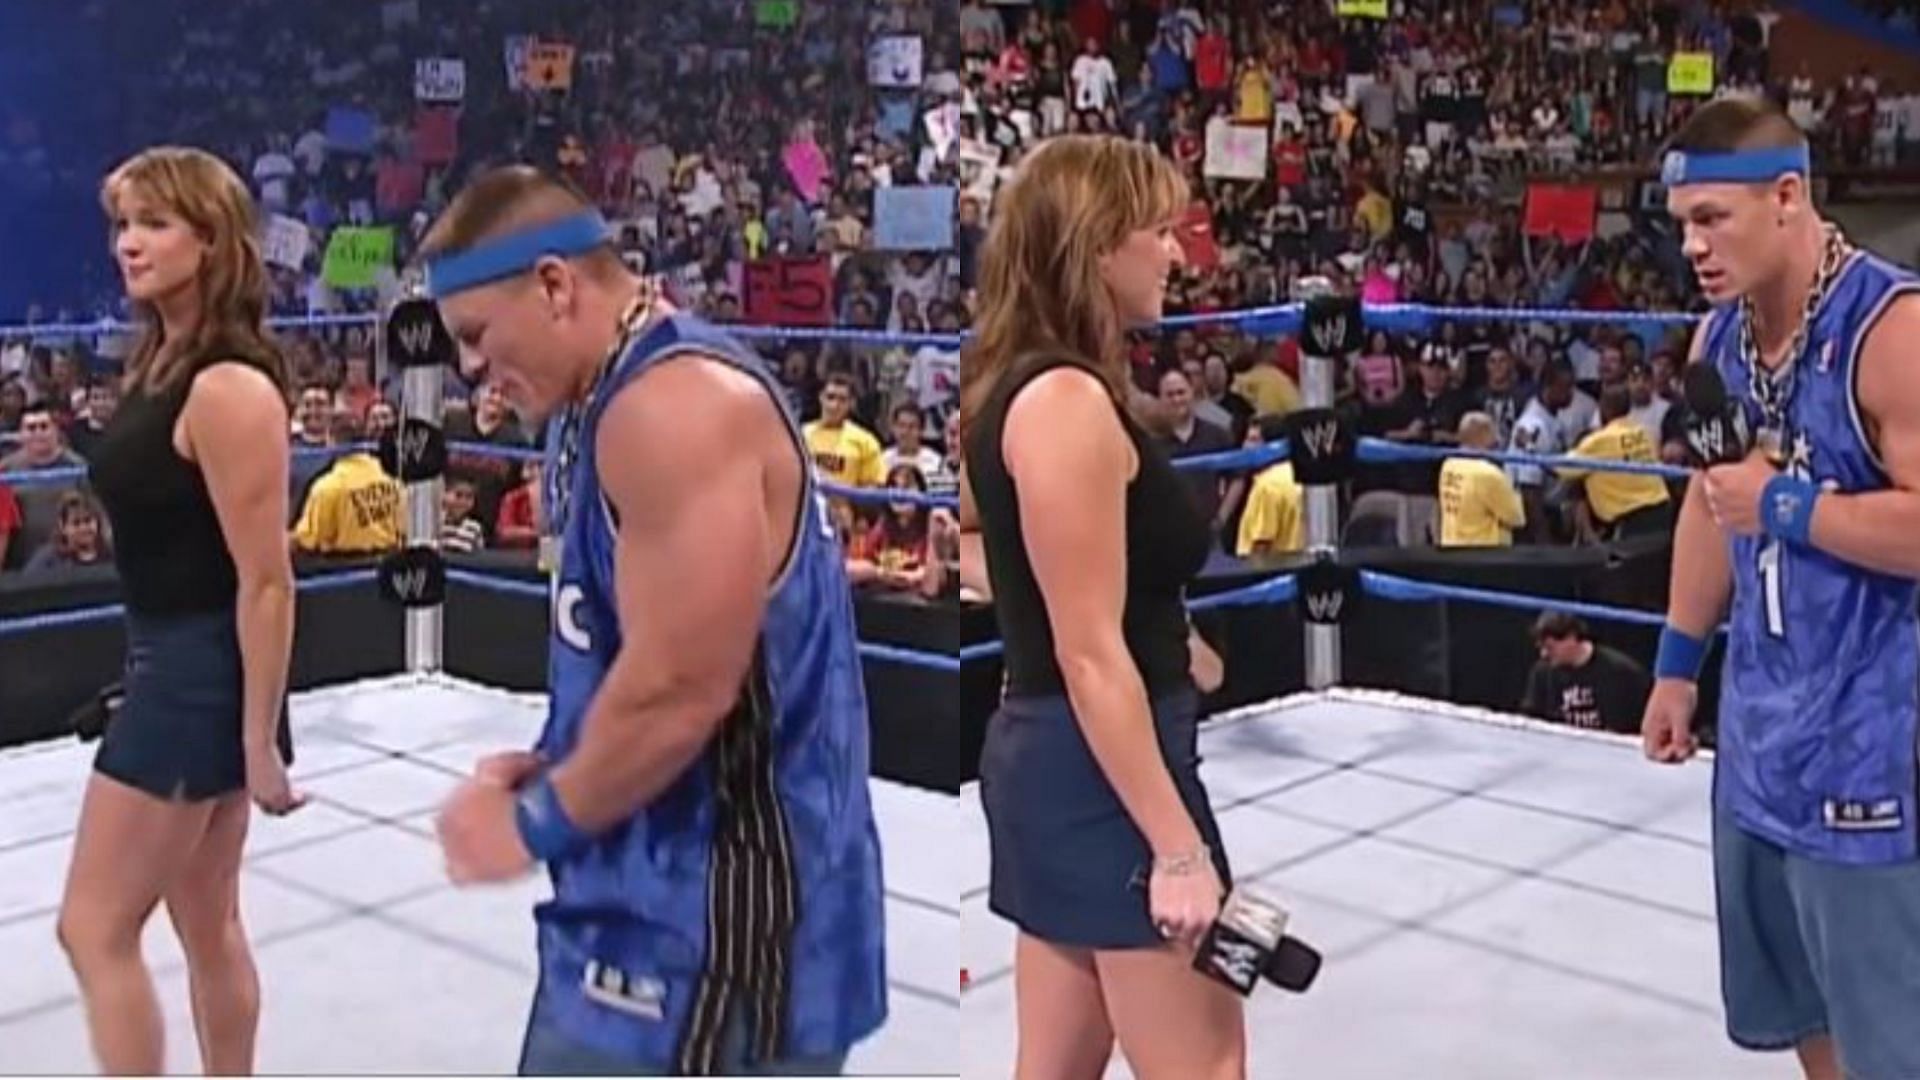 John Cena and Stephanie McMahon had a non-PG segment on WWE TV in 2003